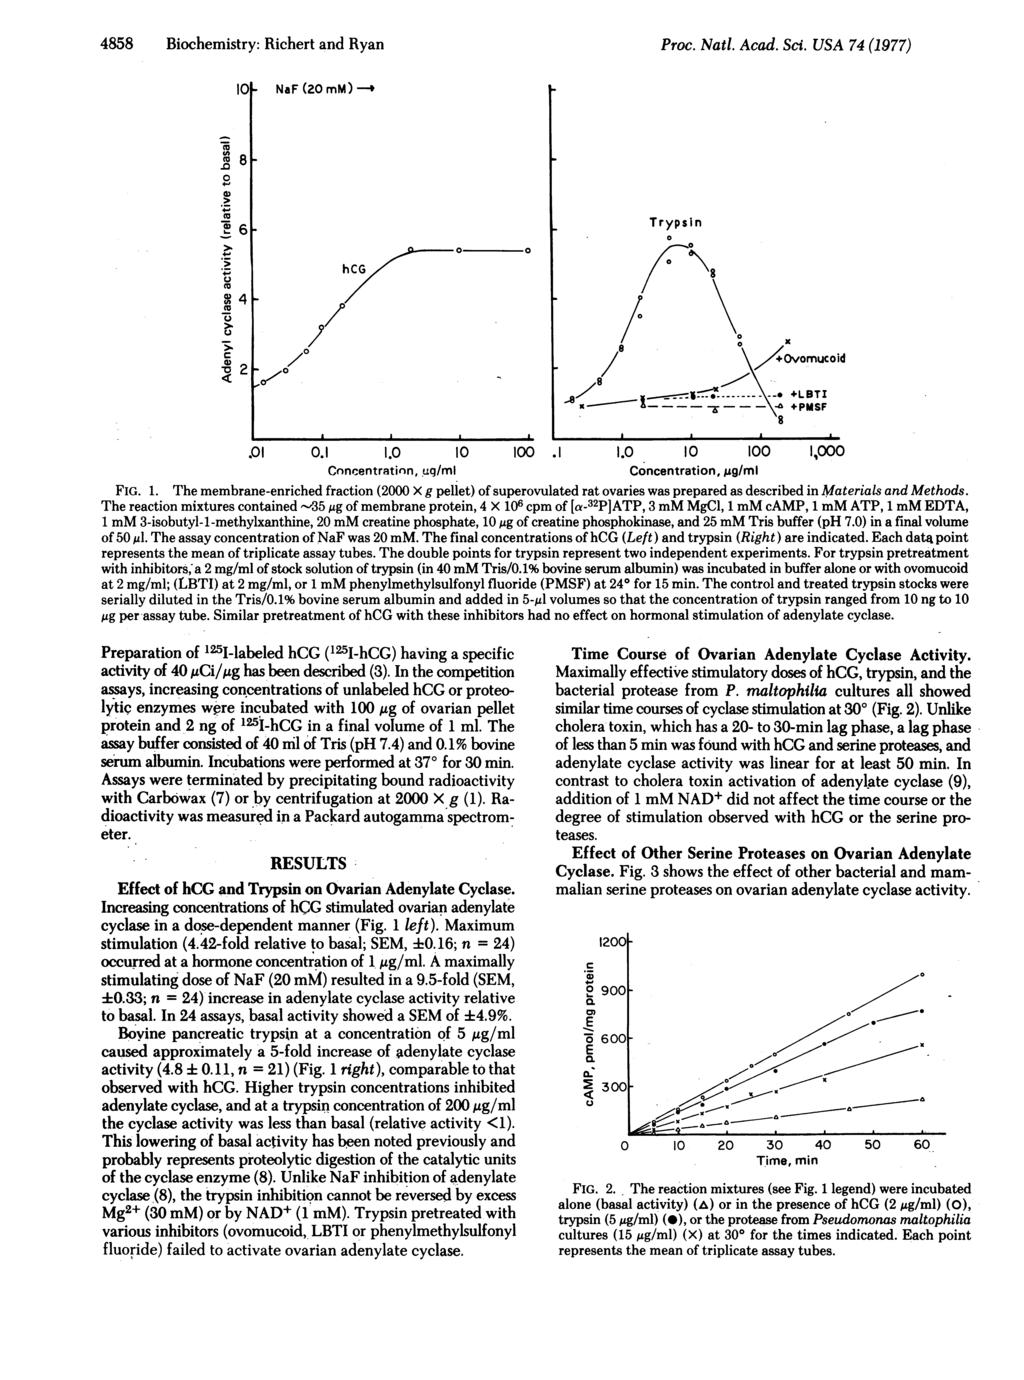 4858 Biochemistry: Richert and Ryan Proc. Natl. Acad. Sci. USA 74 (1977) I NaF(2mM) 4. 8. ( 4I w 6 Trypsin._ ( 4 hcg @K8 m C2 / / \/ Ovomucoid /8,/ _8ll/ Iat X. LBTI x +PMSF 8.1.1 1.